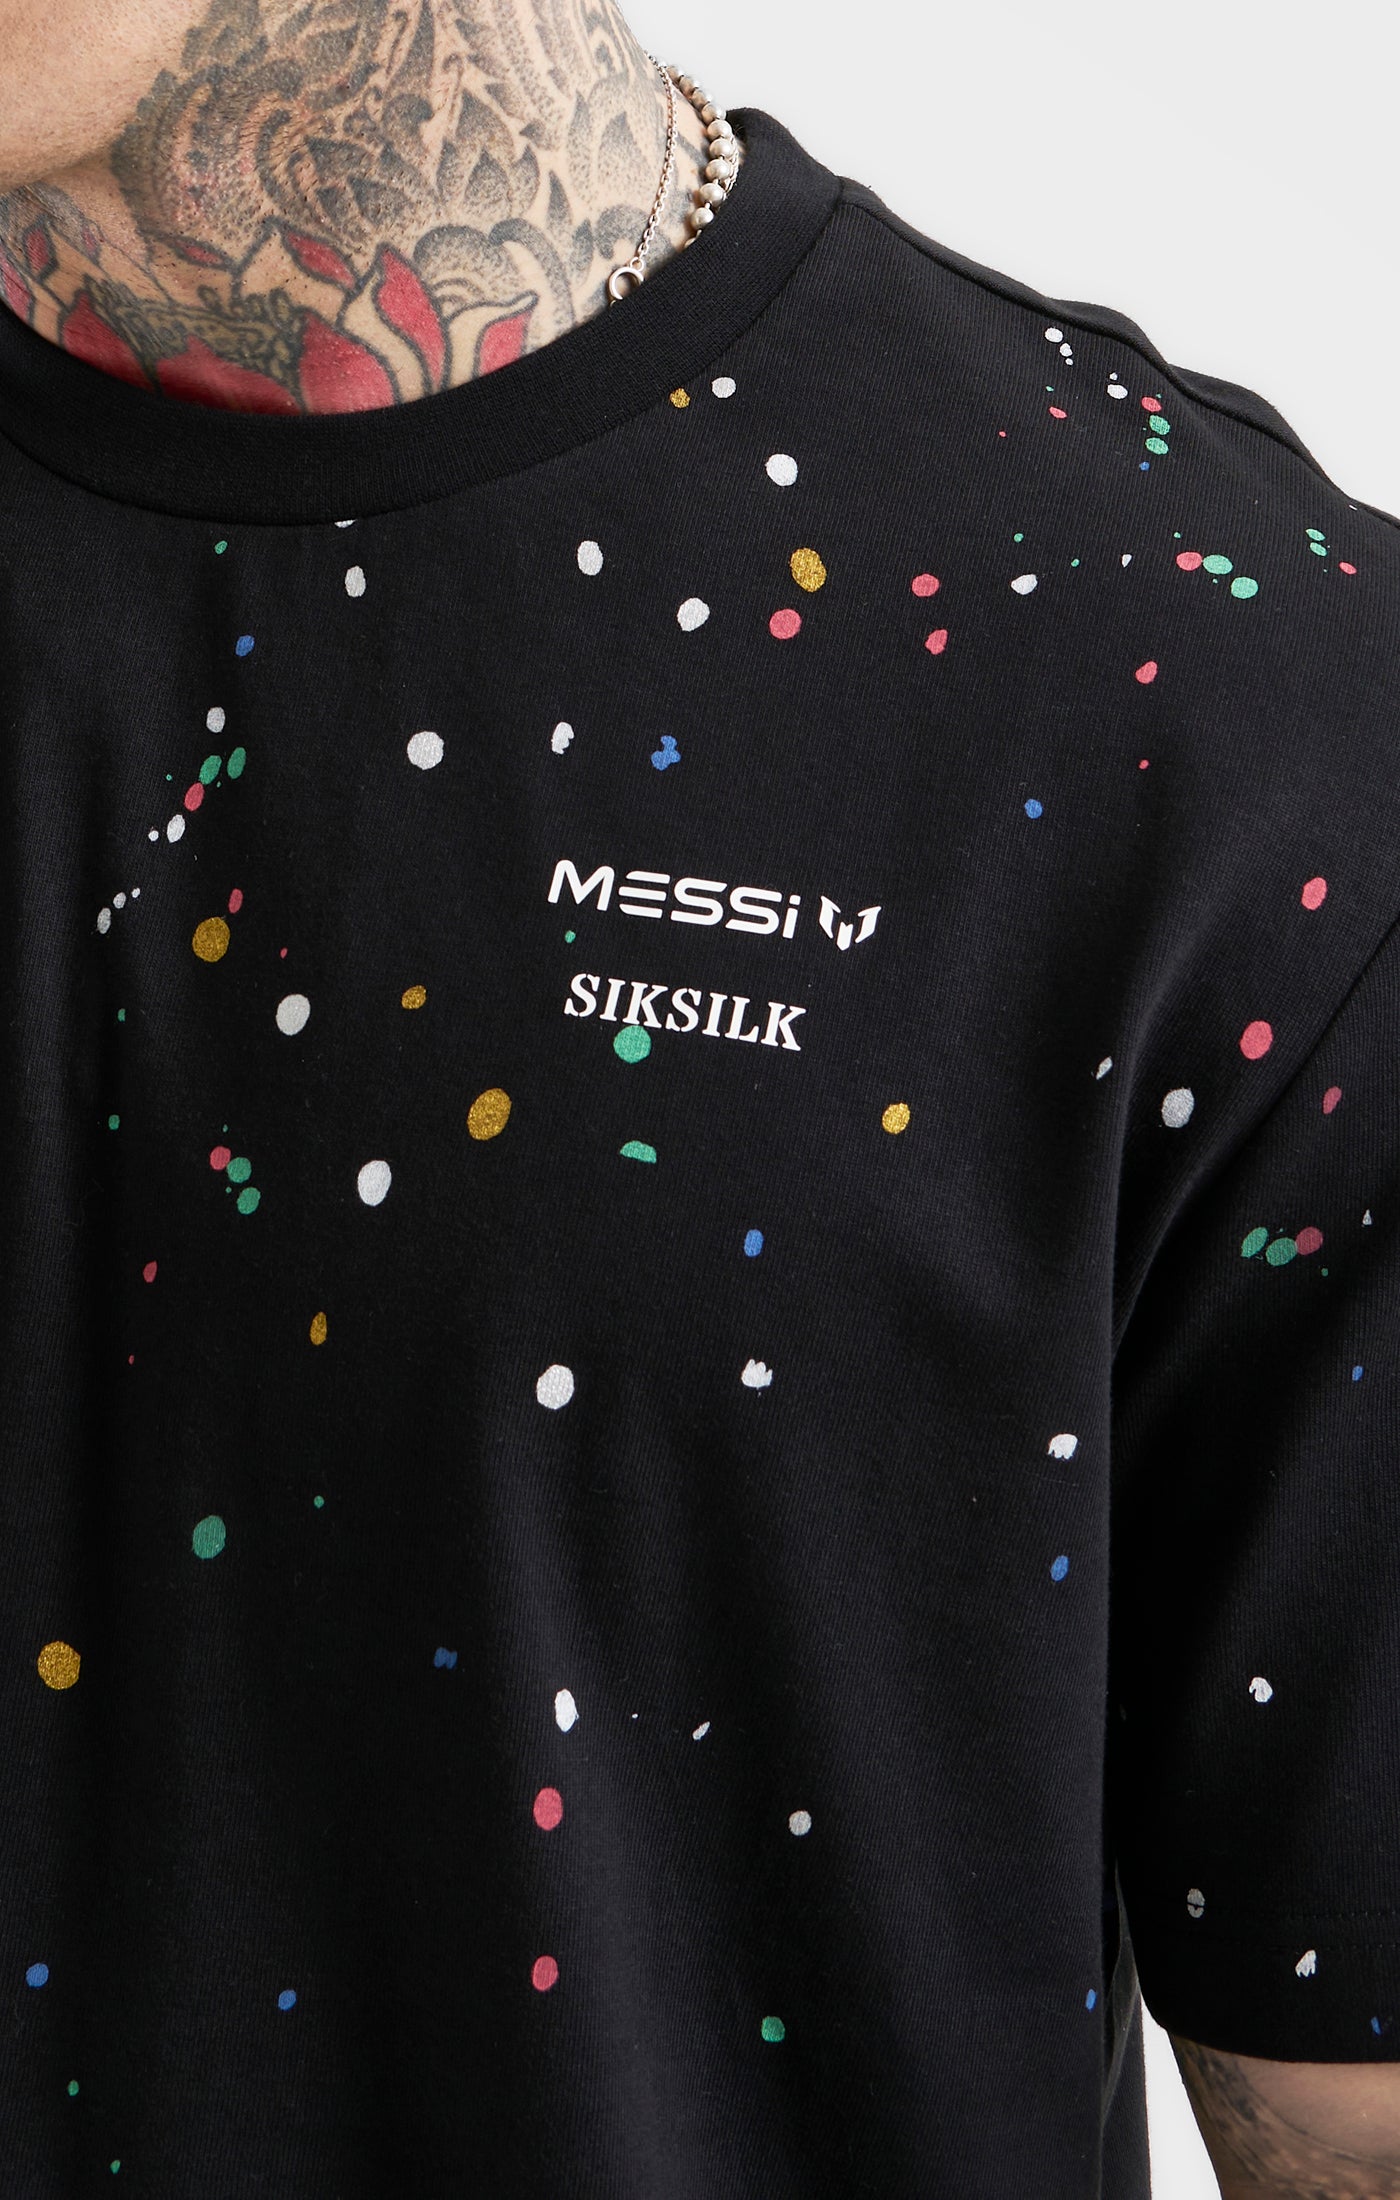 Messi x SikSilk Oversized Paint Splat Tee - Black (1)